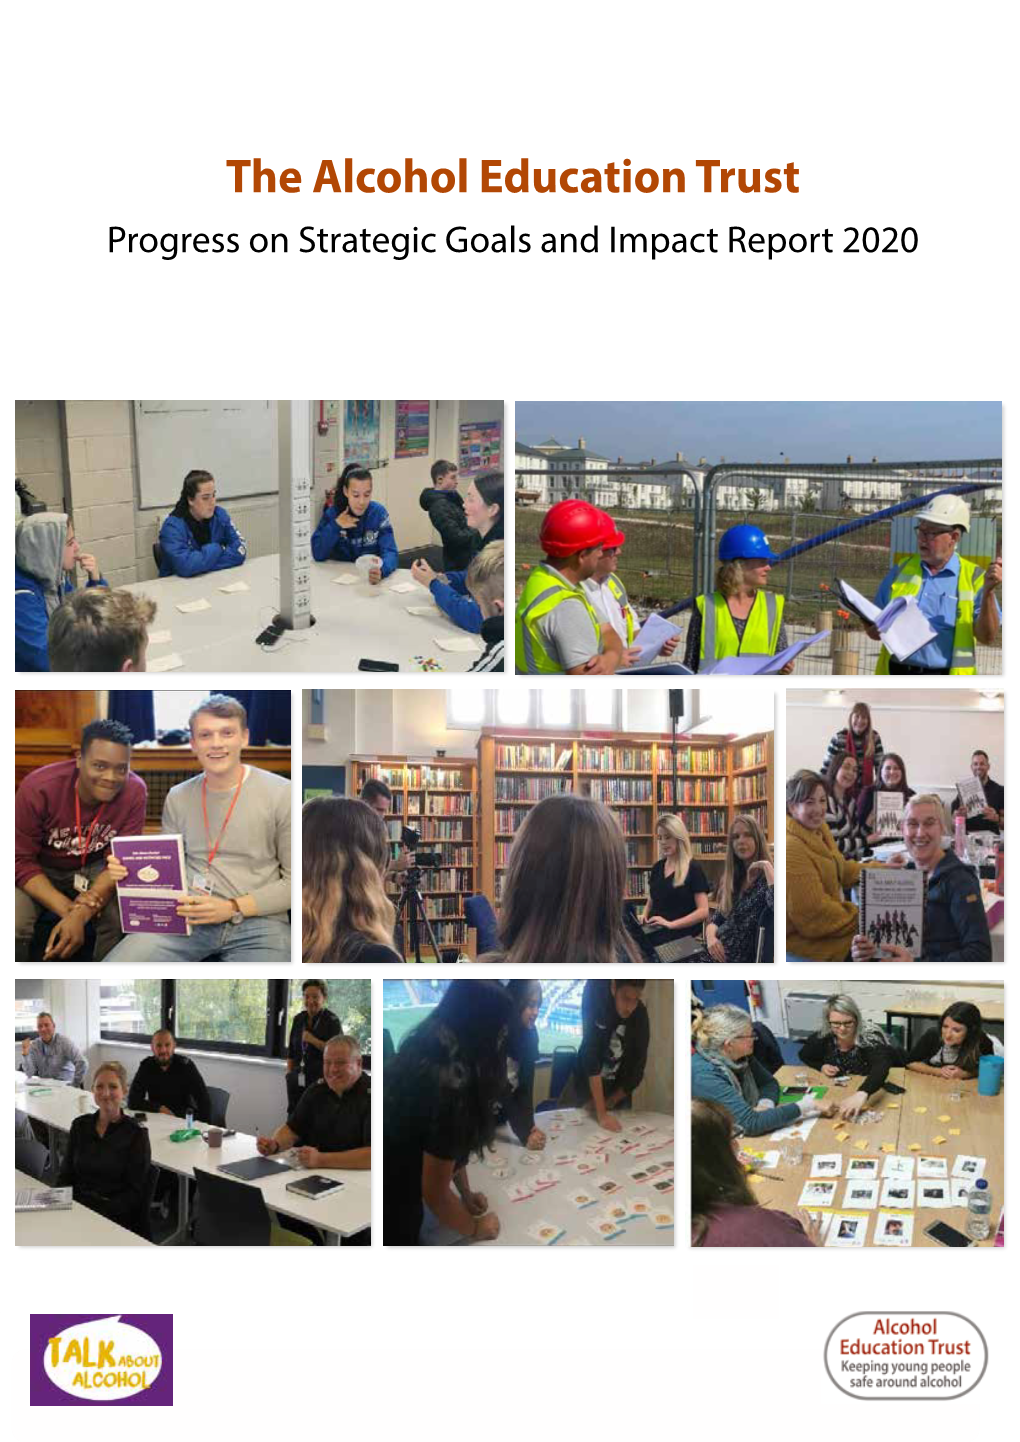 Progress and Impact Report 2020